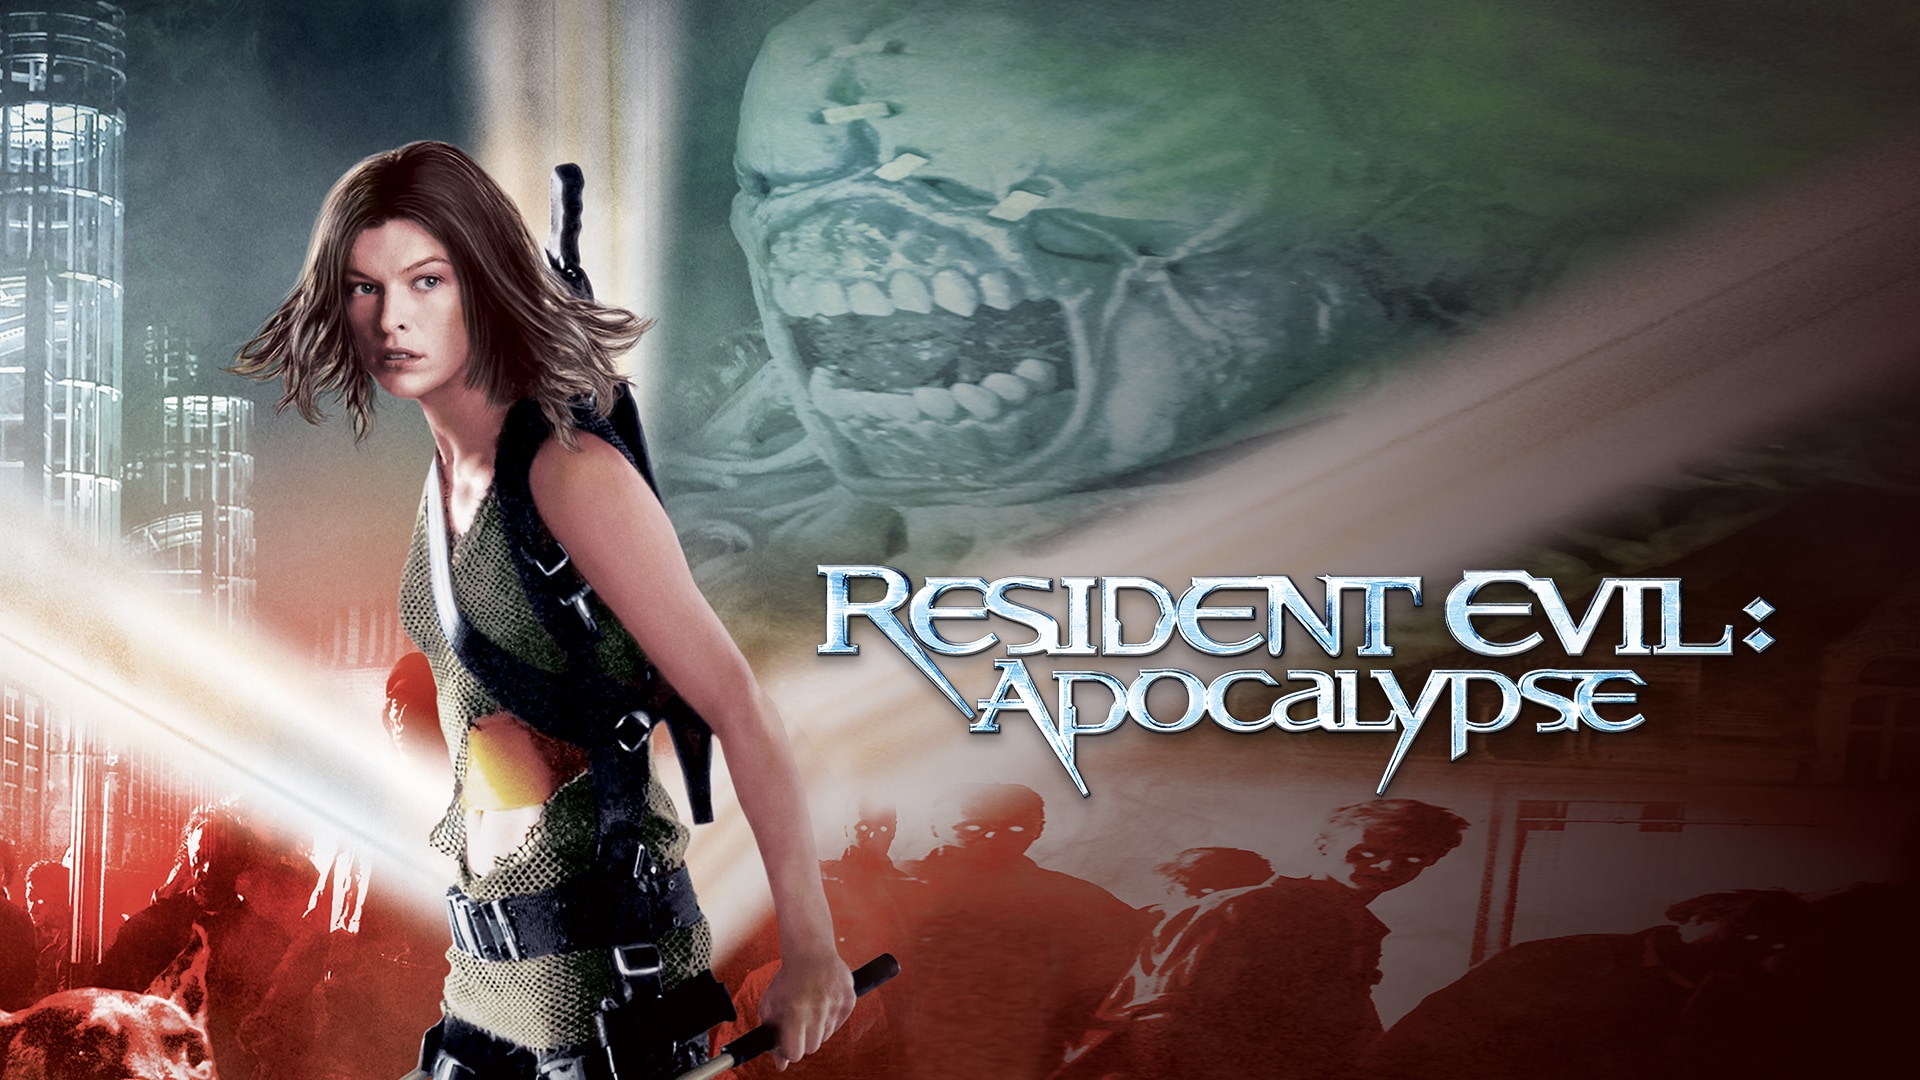 Watch Resident Evil: Apocalypse Online | Stream Full Movies